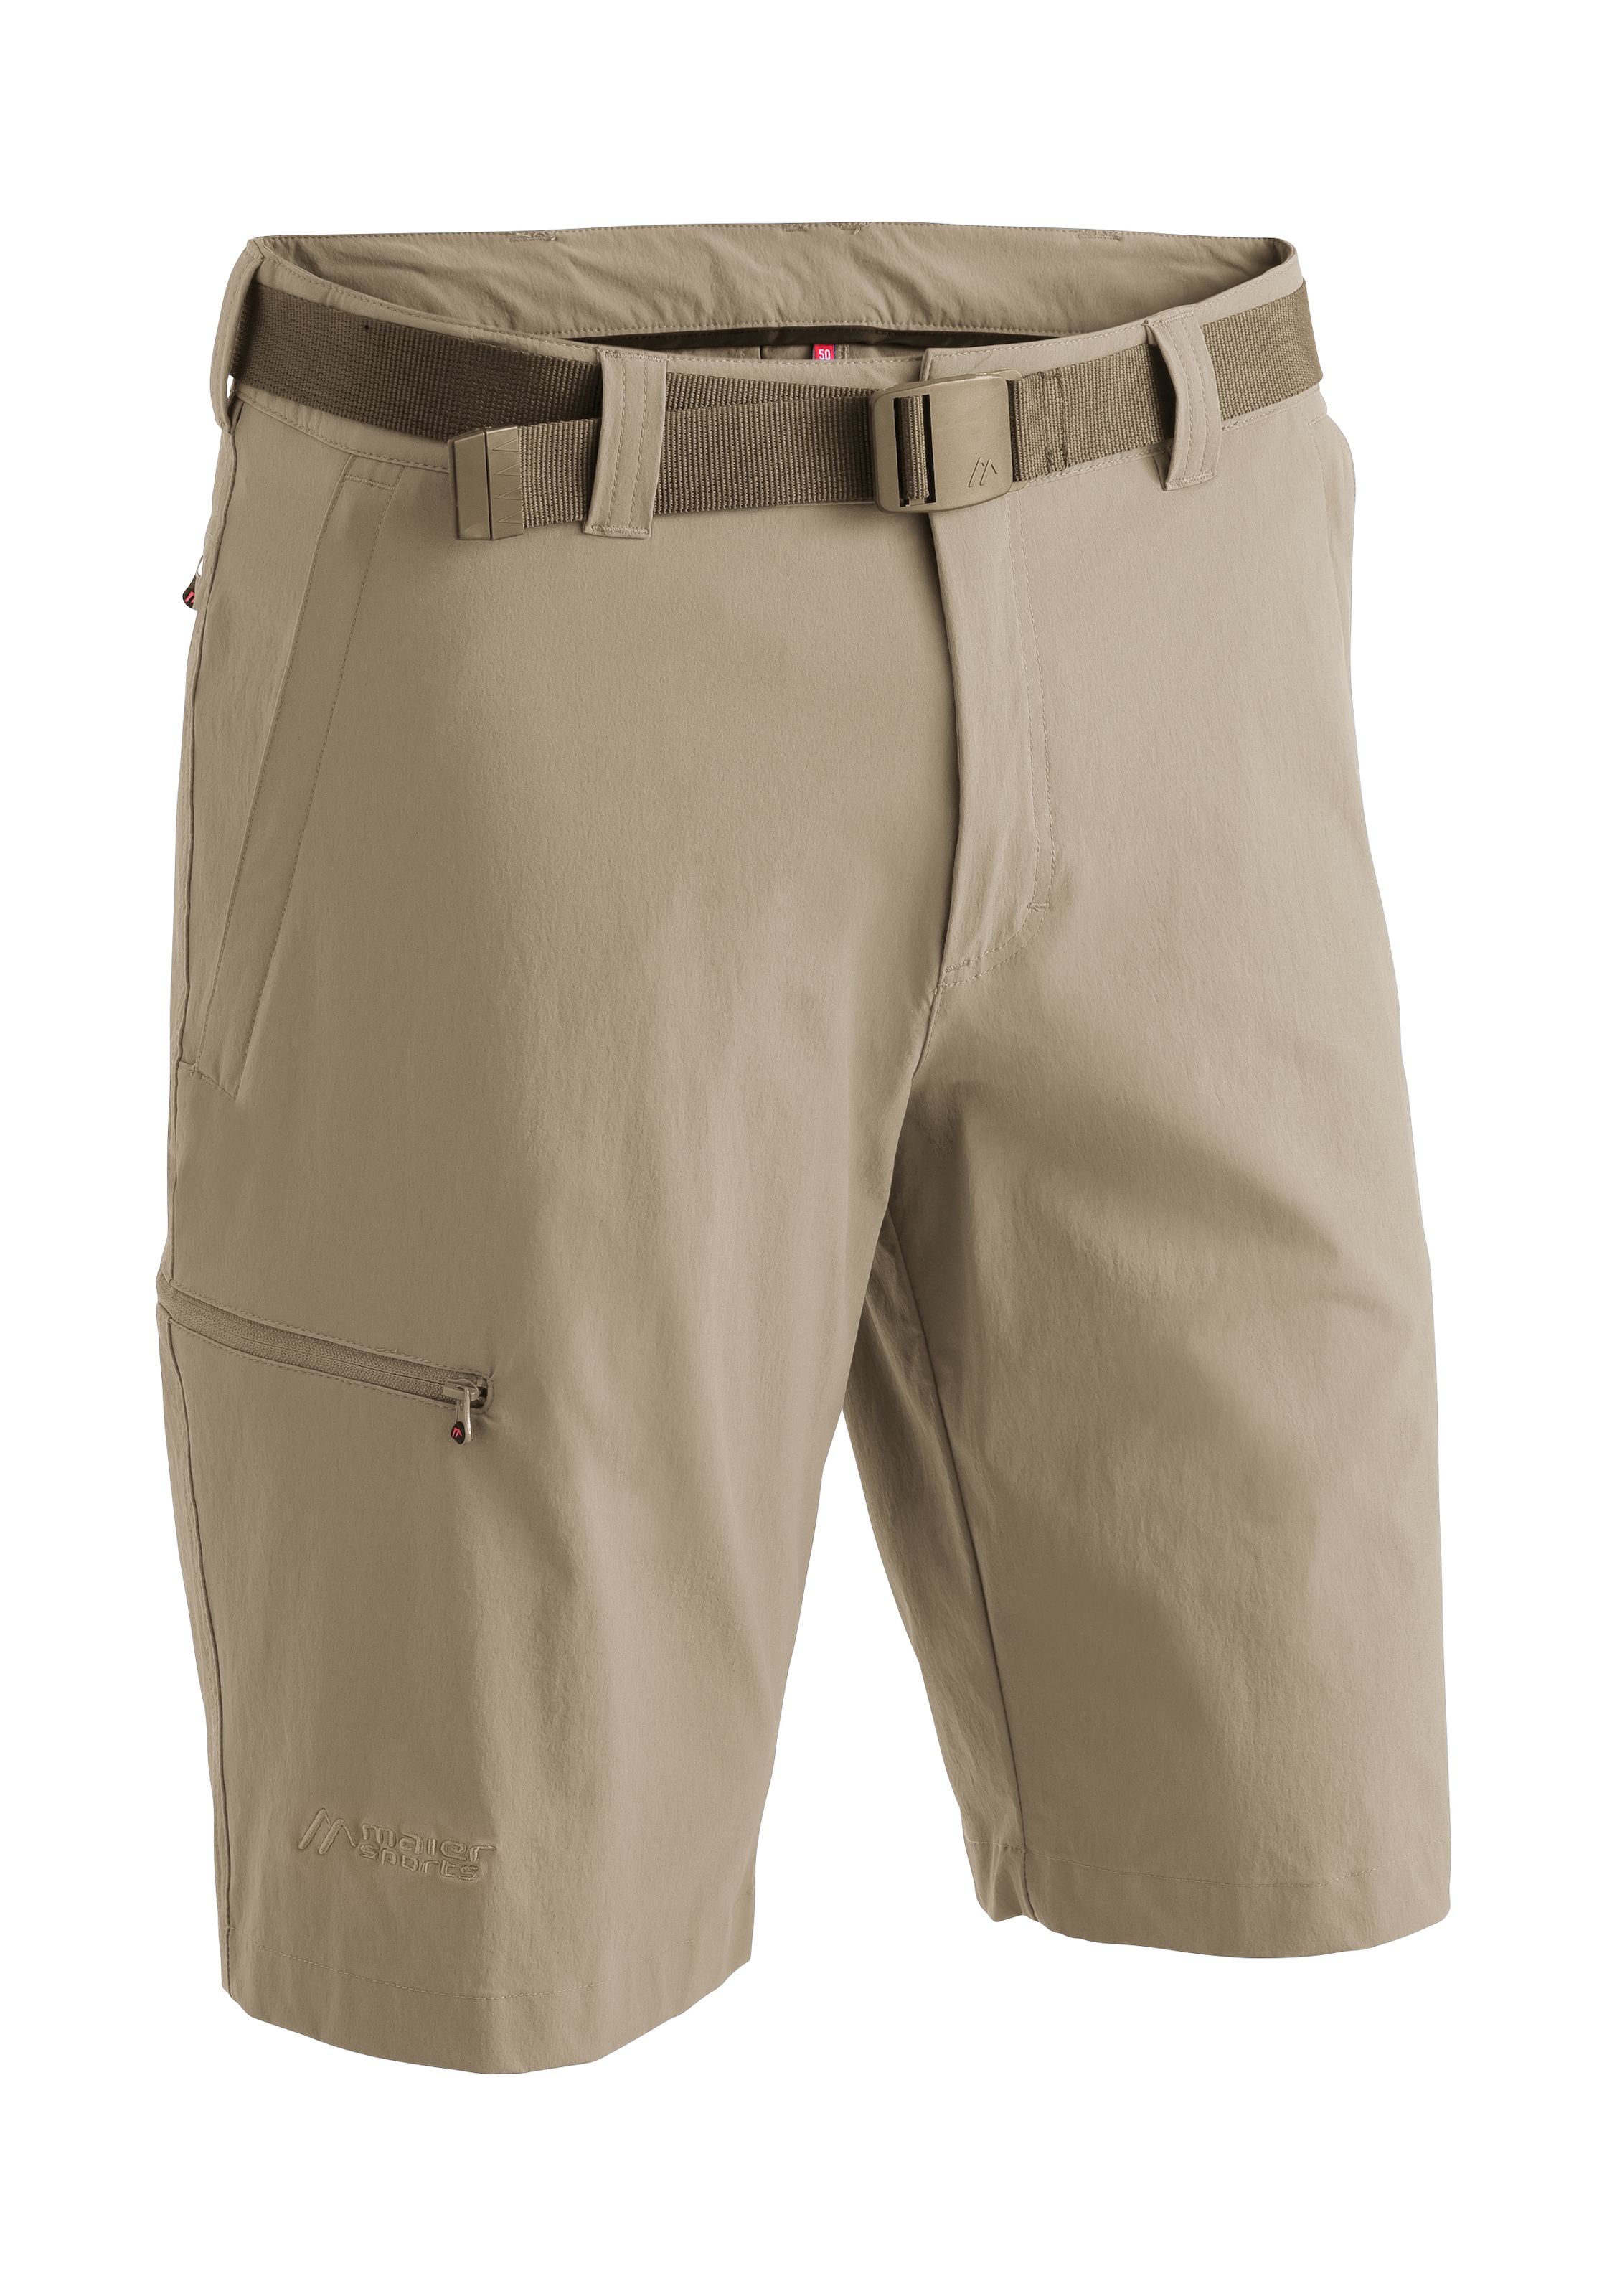 Maier Sports Funktionsshorts "Huang", Herren Shorts, kurze Outdoor-Hose, Bermudas mit 4 Taschen, Regular Fit